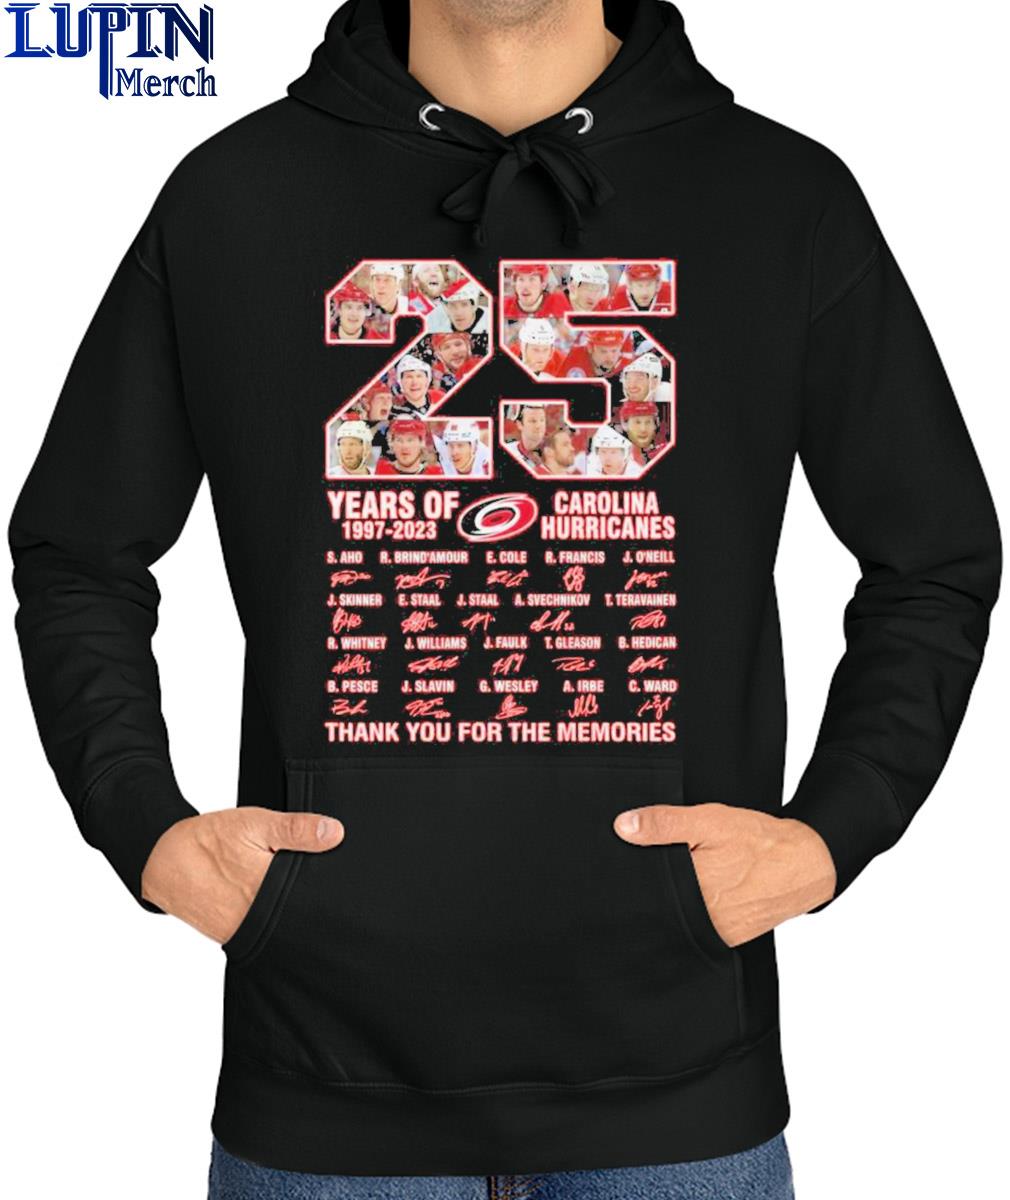 Carolina hurricanes 25th anniversary est 1997 shirt, hoodie, sweatshirt and  tank top